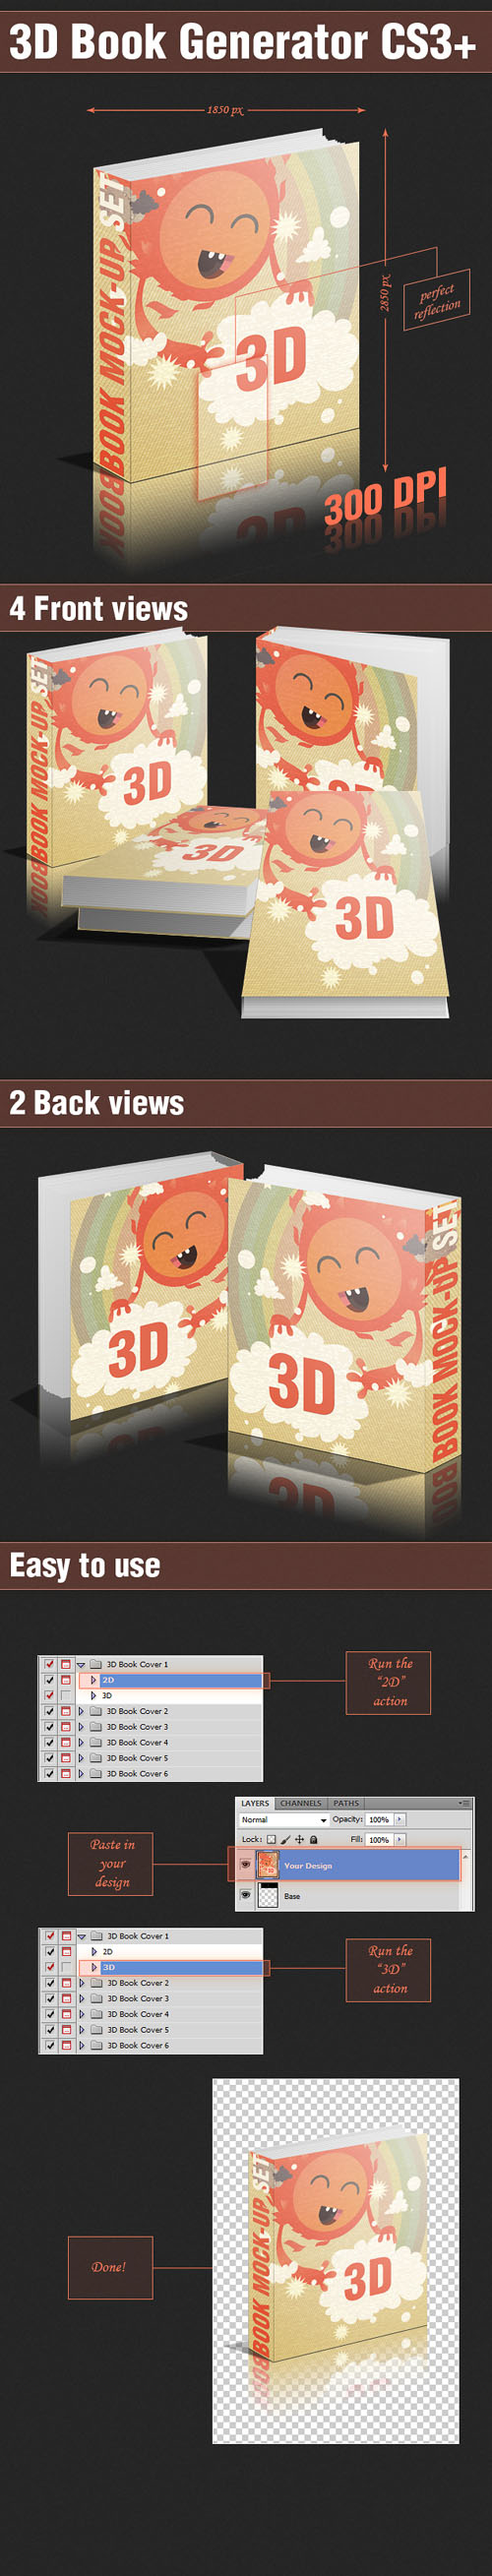 3d book photoshop action download